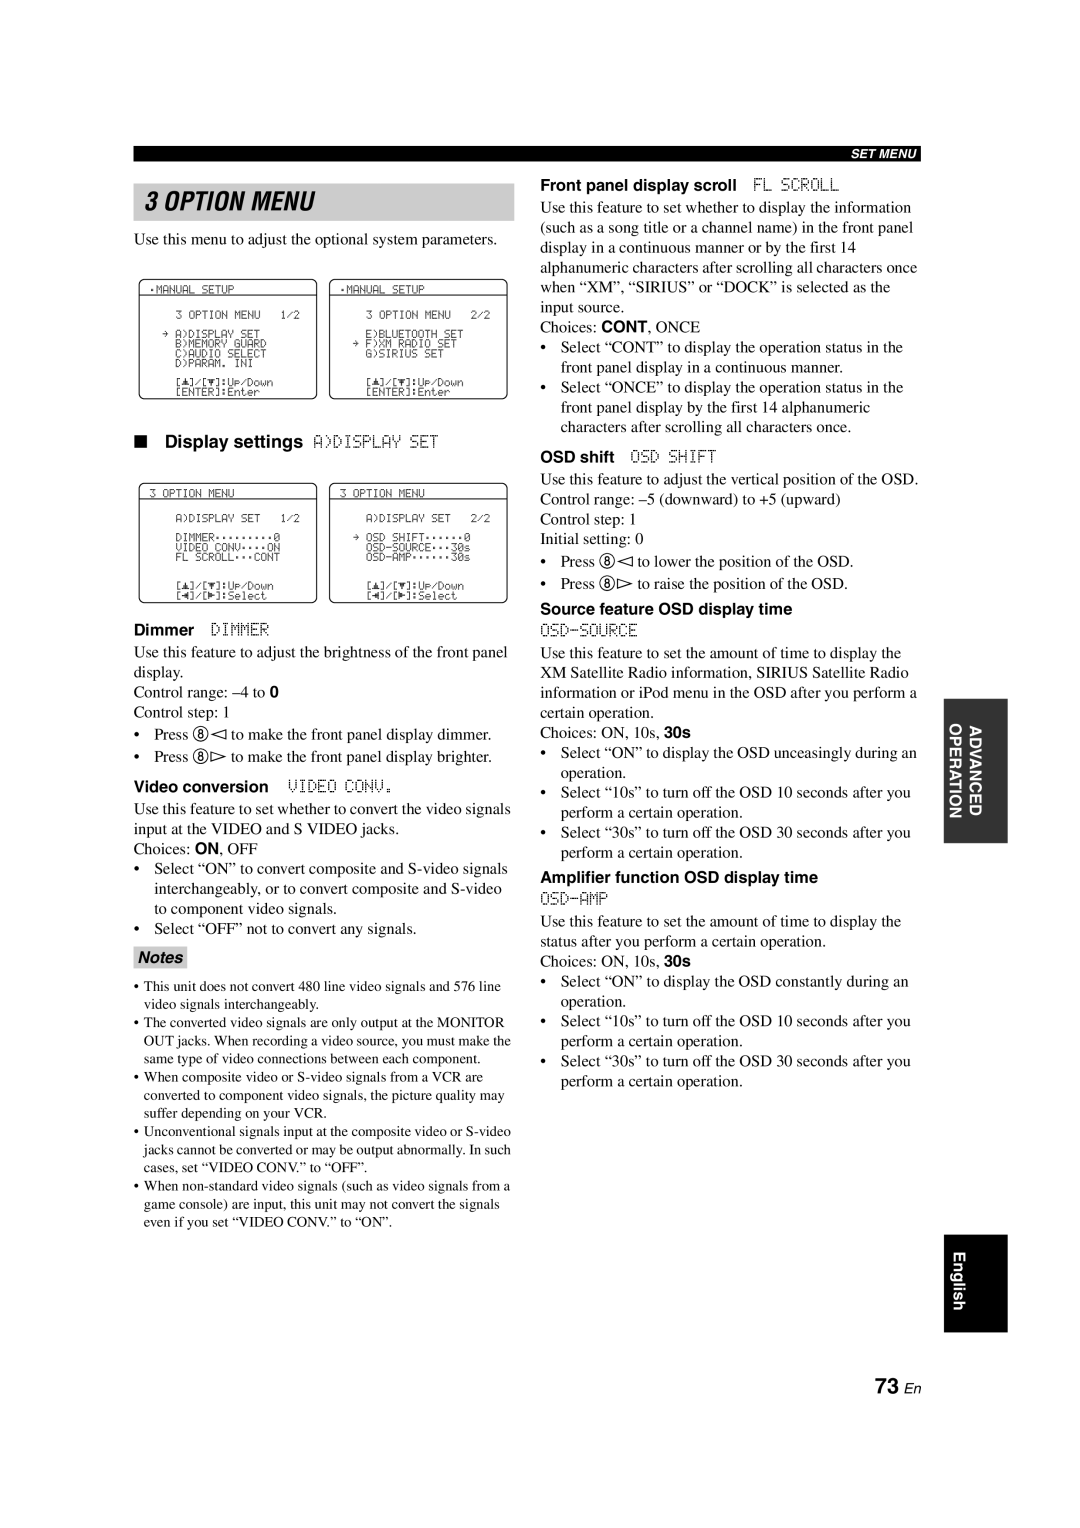 Yamaha HTR-6150 owner manual Option Menu, 73 En, Display settings ADISPLAY SET, Notes 